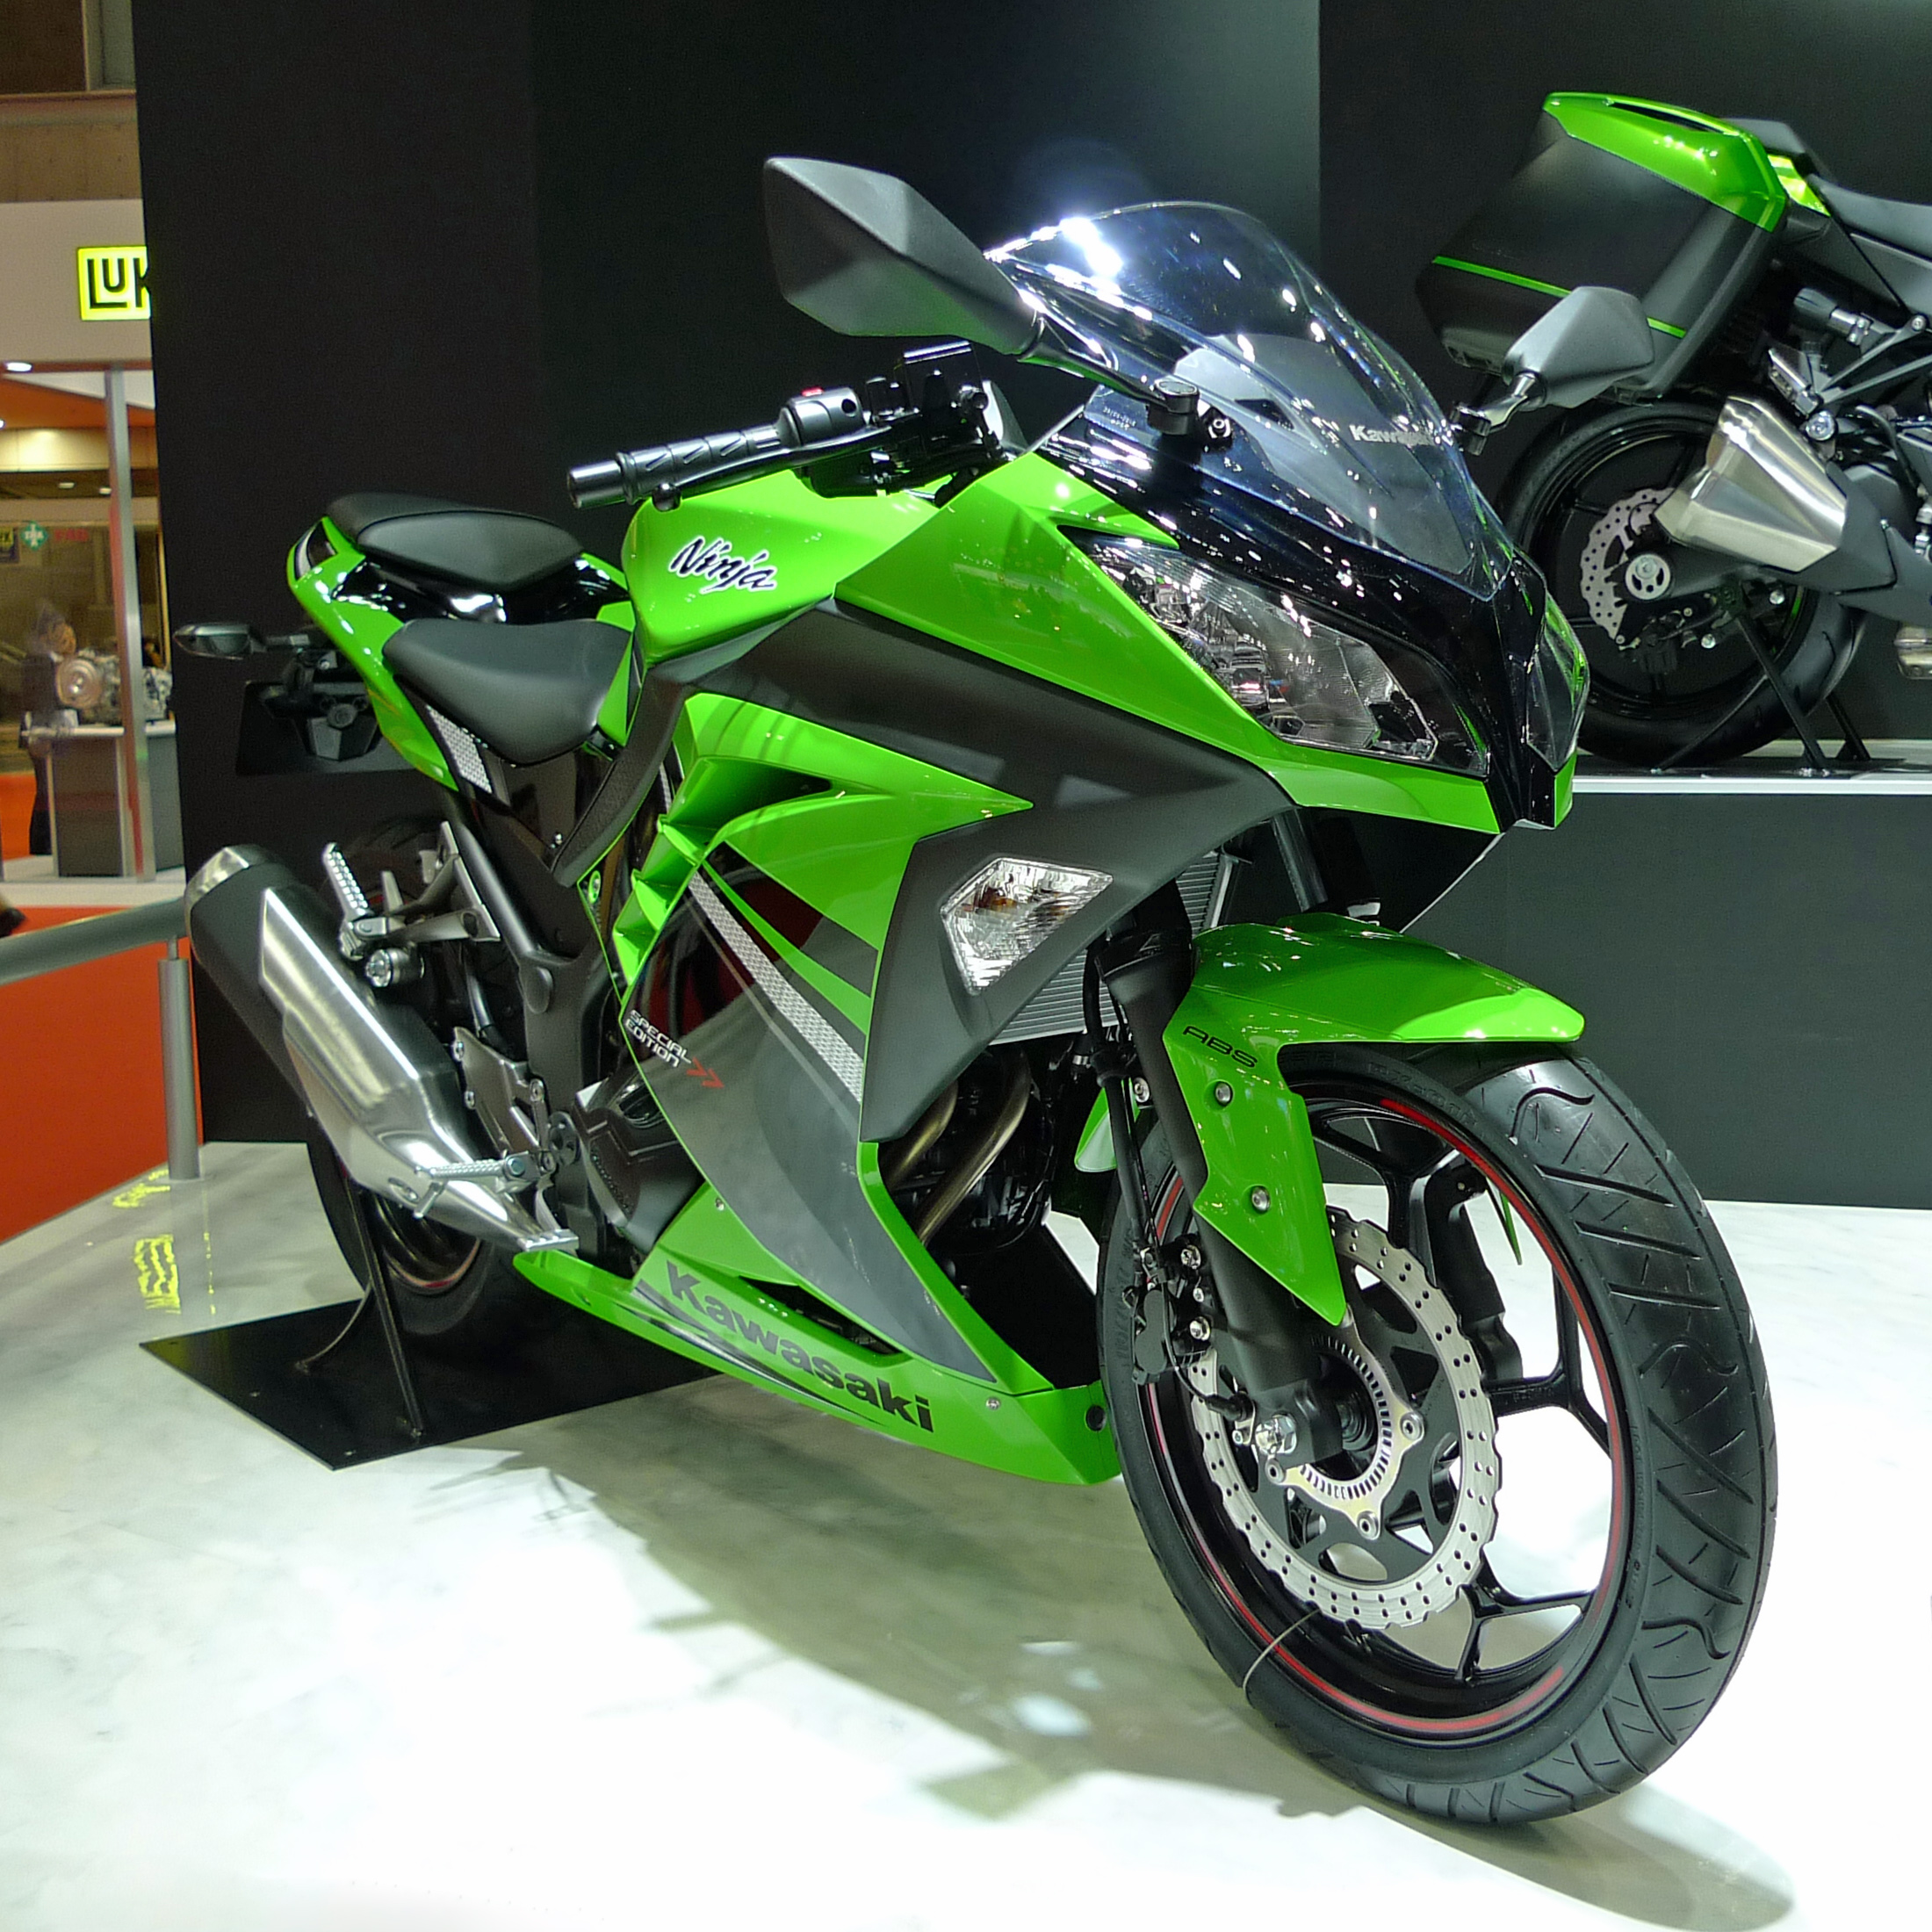 Мотоцикл kawasaki ninja 250 r 2011 — все нюансы